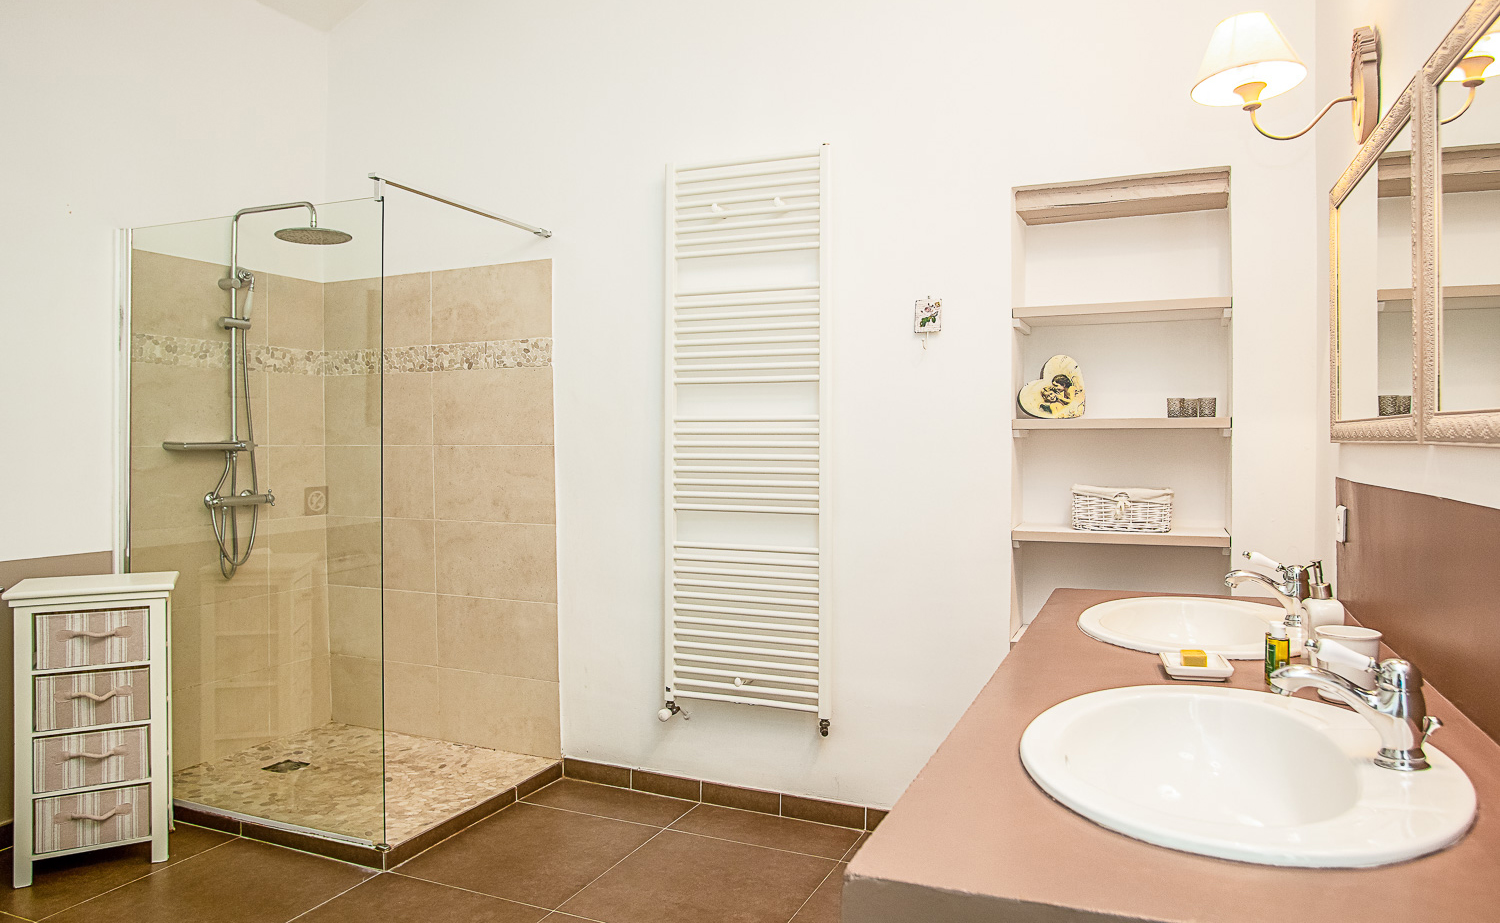 Lovelydays luxury service apartment rental - St Rémy de Provence and surroundings - Mas Ameu - Partner - 6 bedrooms - 6 bathrooms - Lovely shower - 3a8f8be404bd - Lovelydays